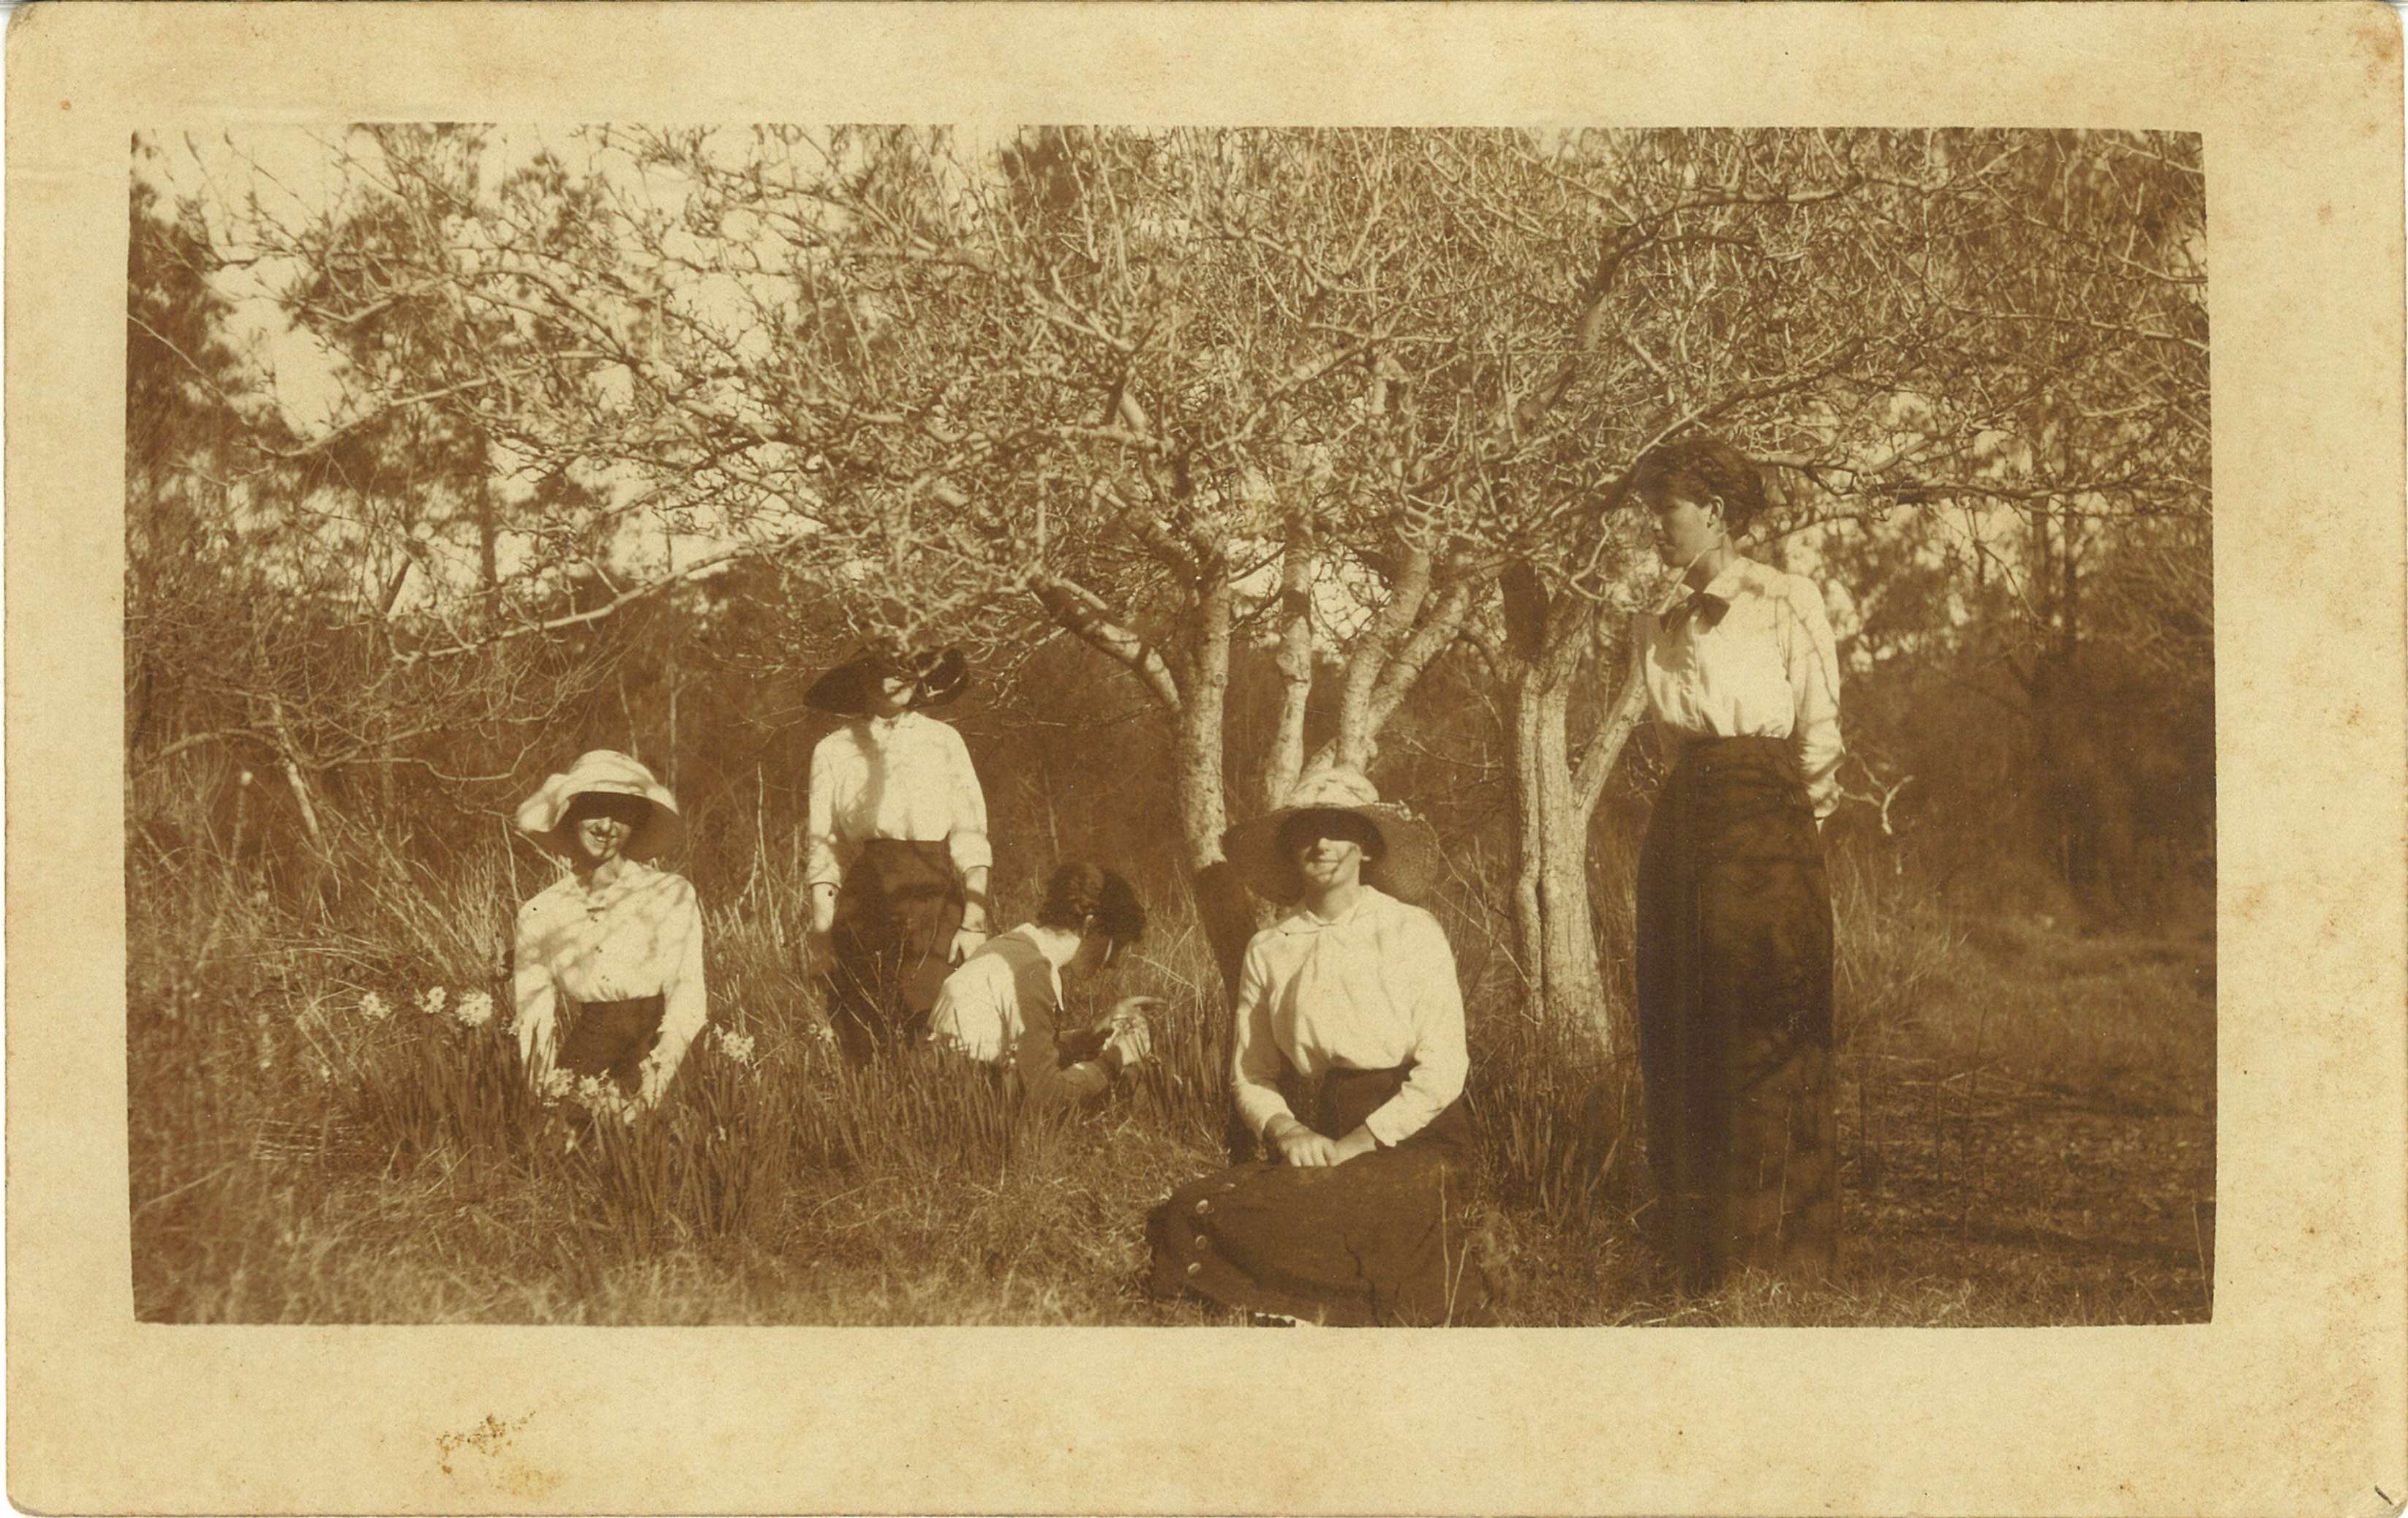 The Nicolle sisters at Lake Illawarra, around 1916 / Robert Barnet